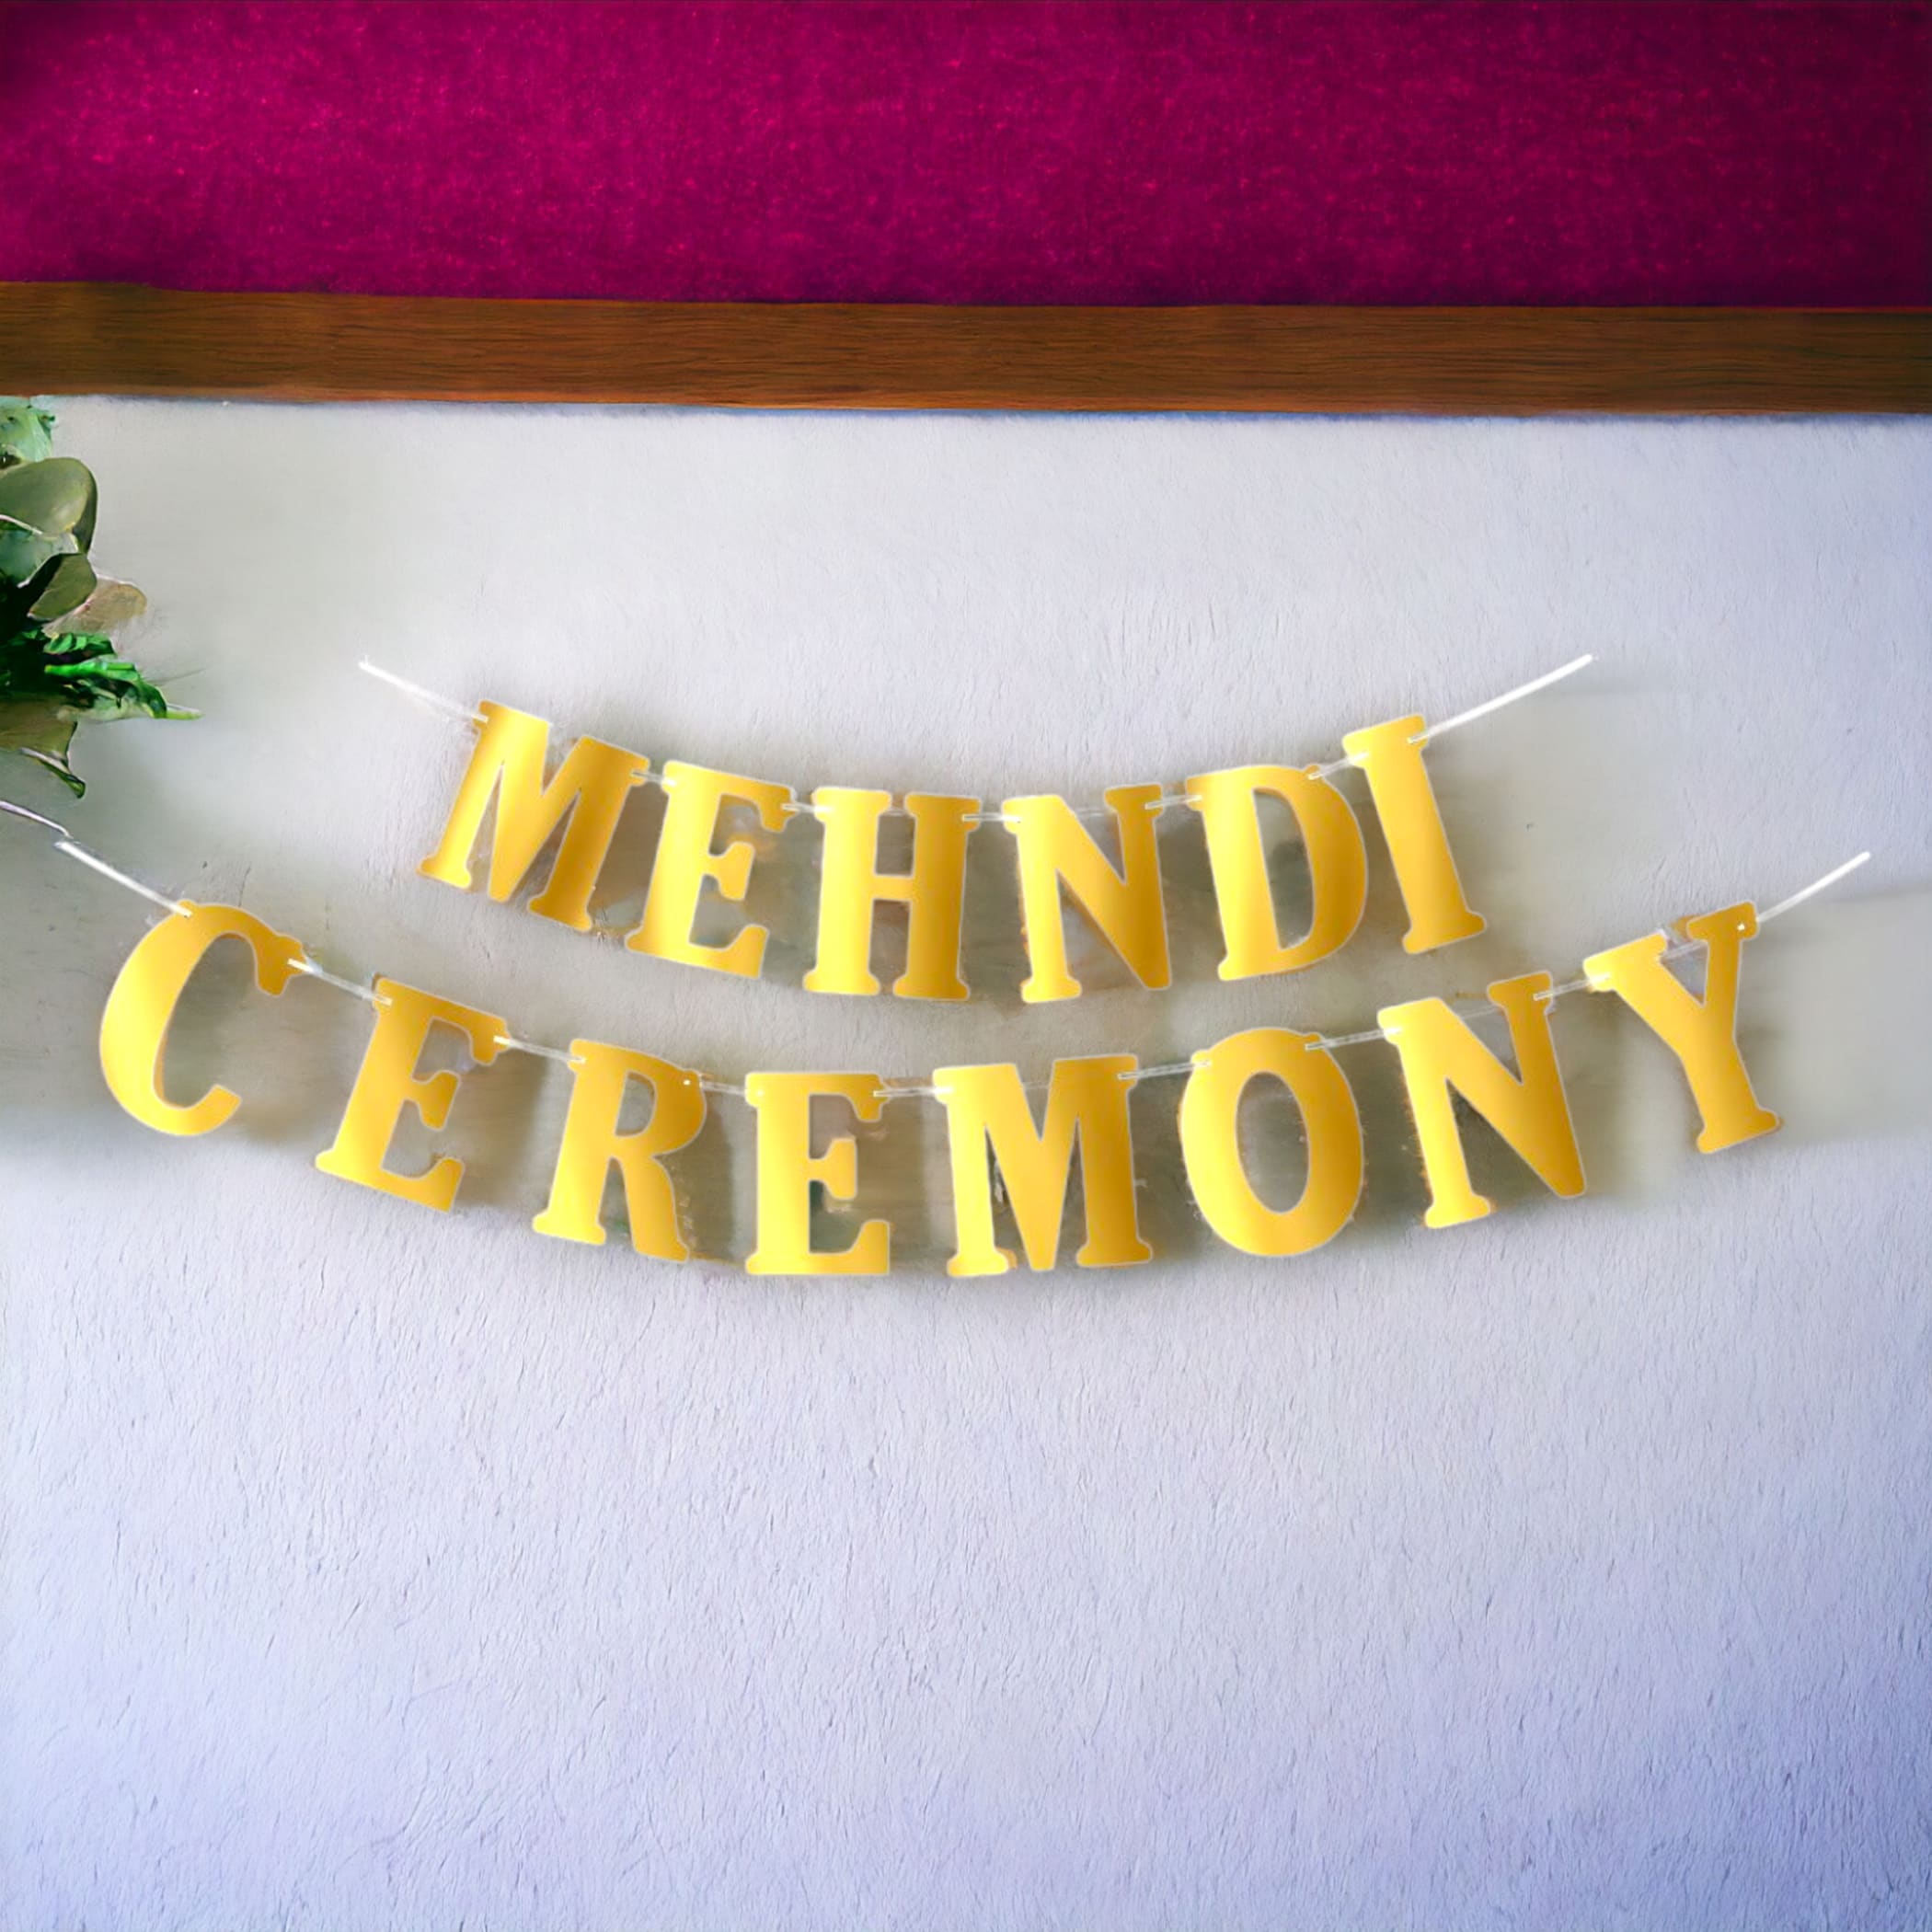 Mehndi ceremony banner bunting diy indian wedding sign